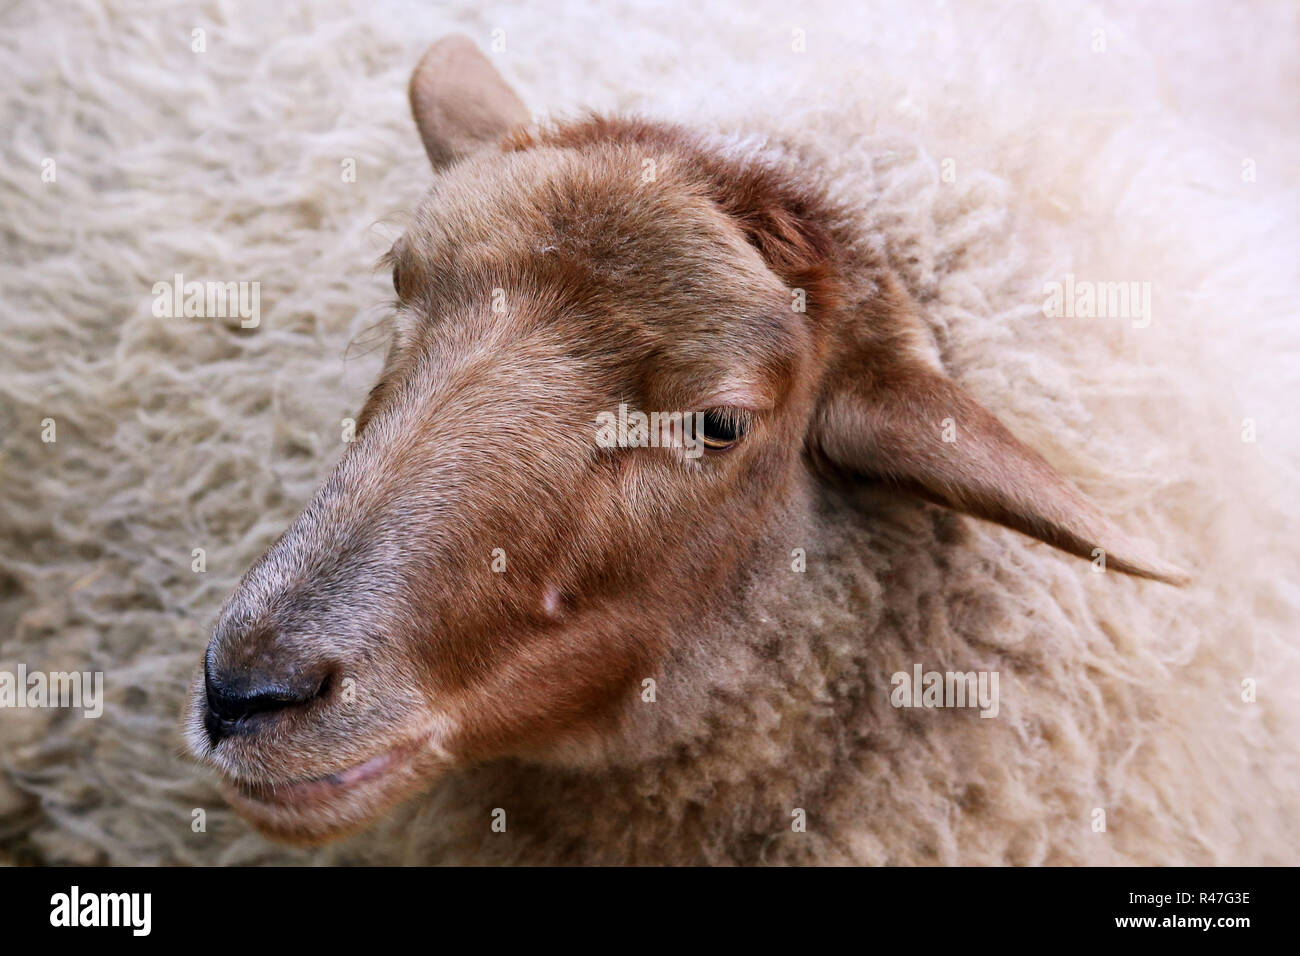 sheep in closeup Stock Photo